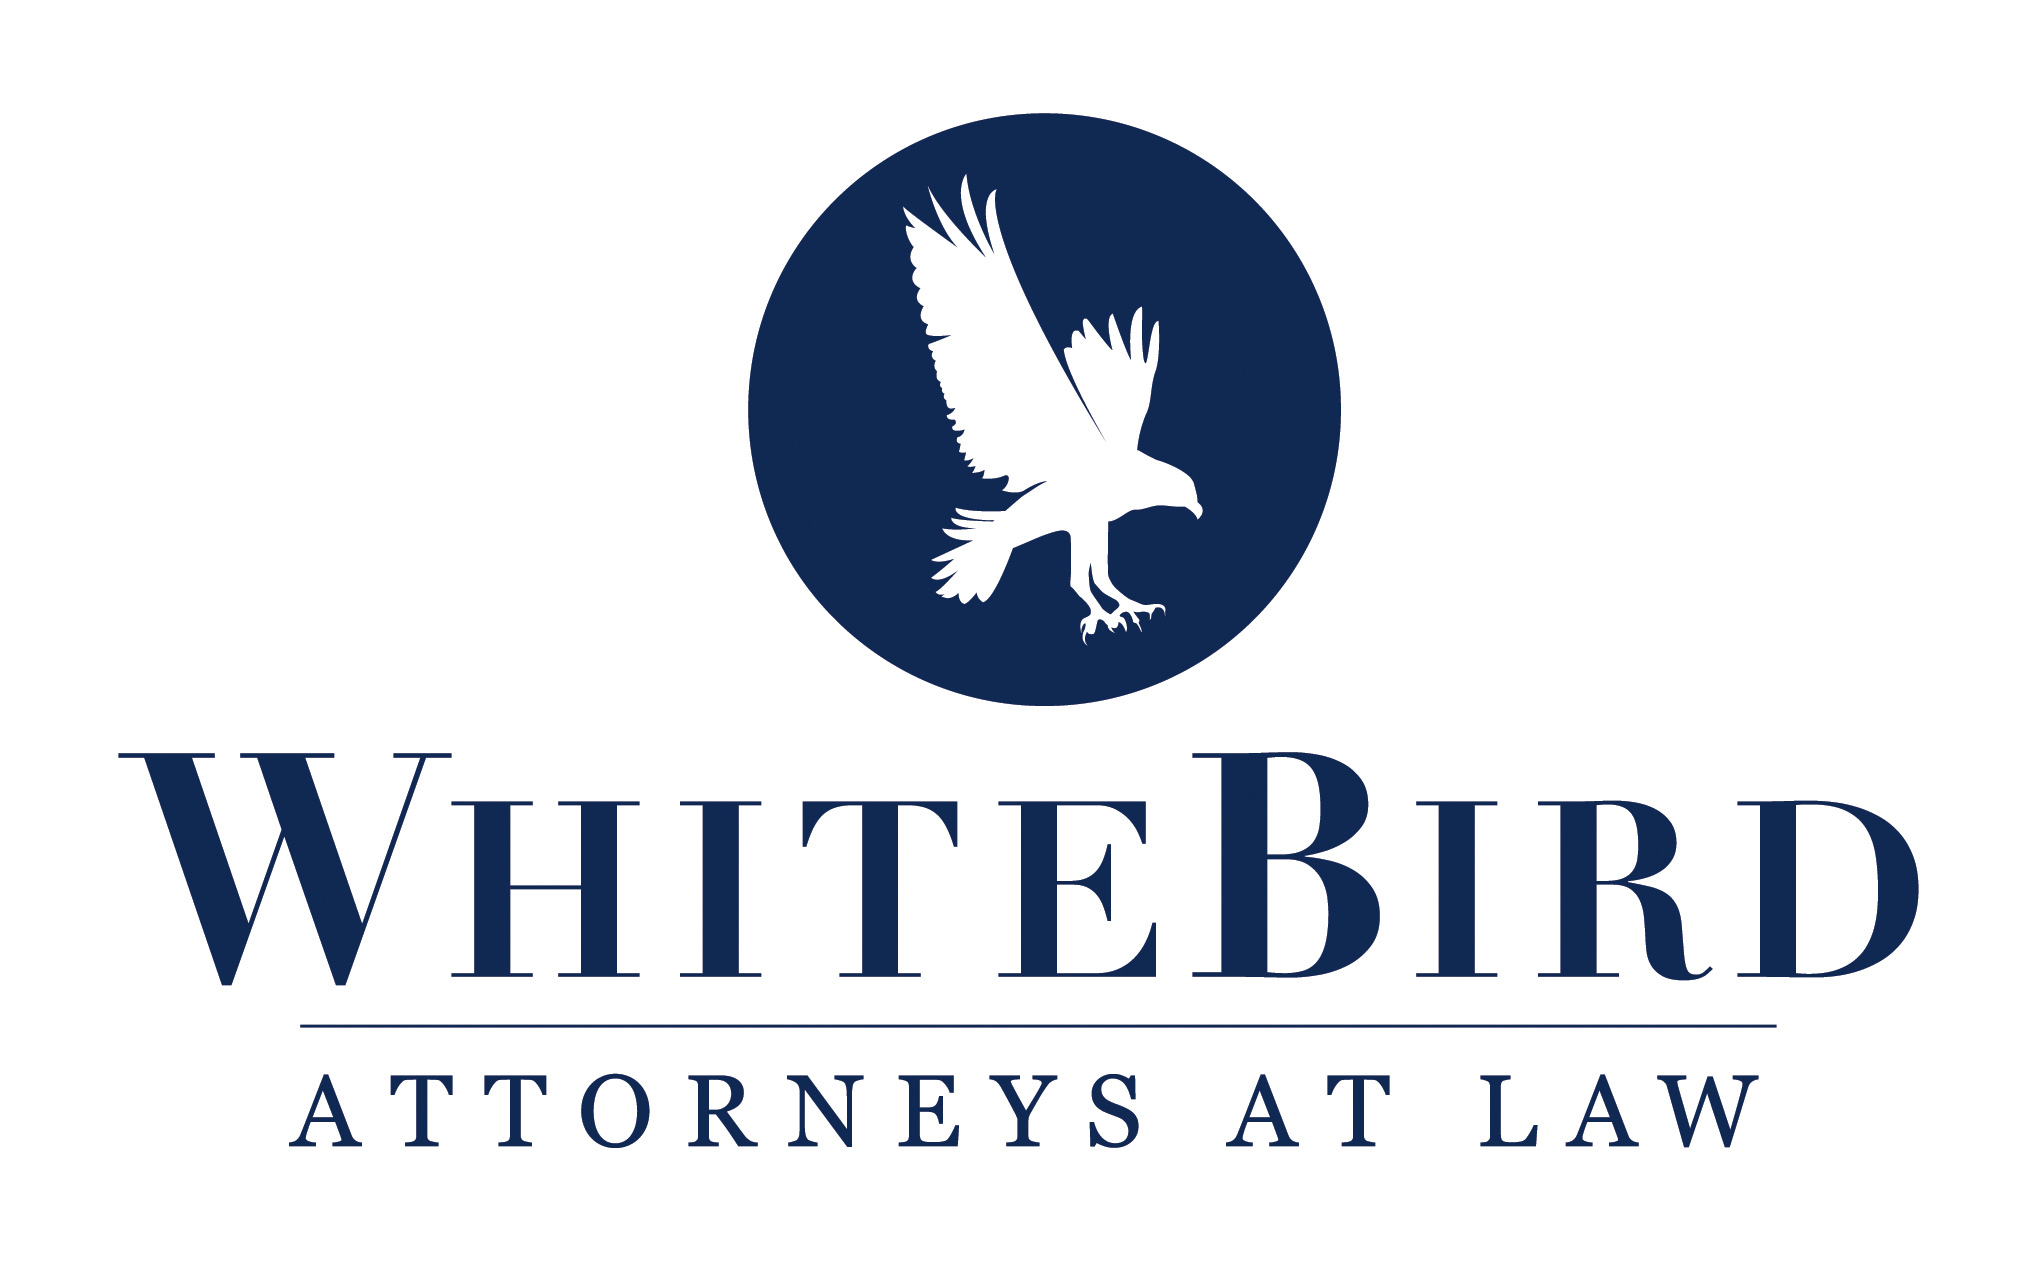 WhiteBird Attorneys at Law